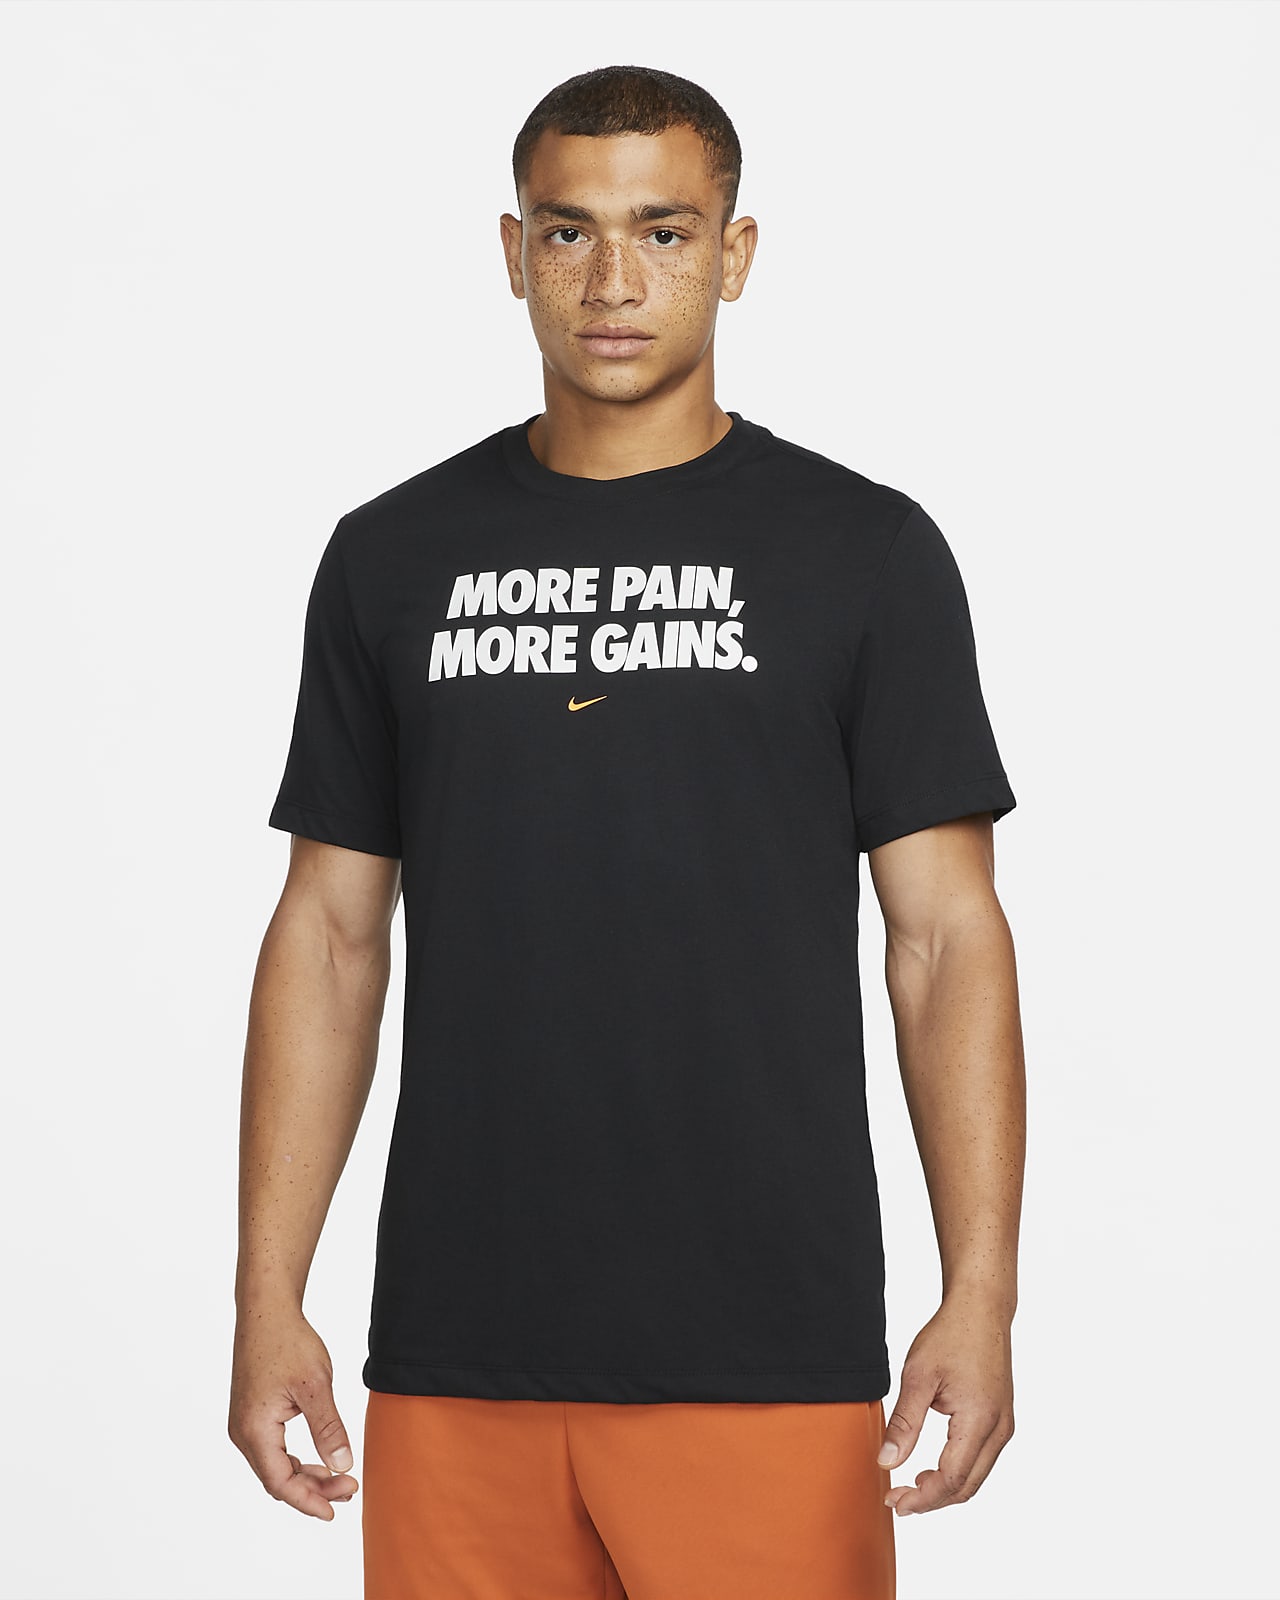 Nike Motivational T Shirts – blenderbelic